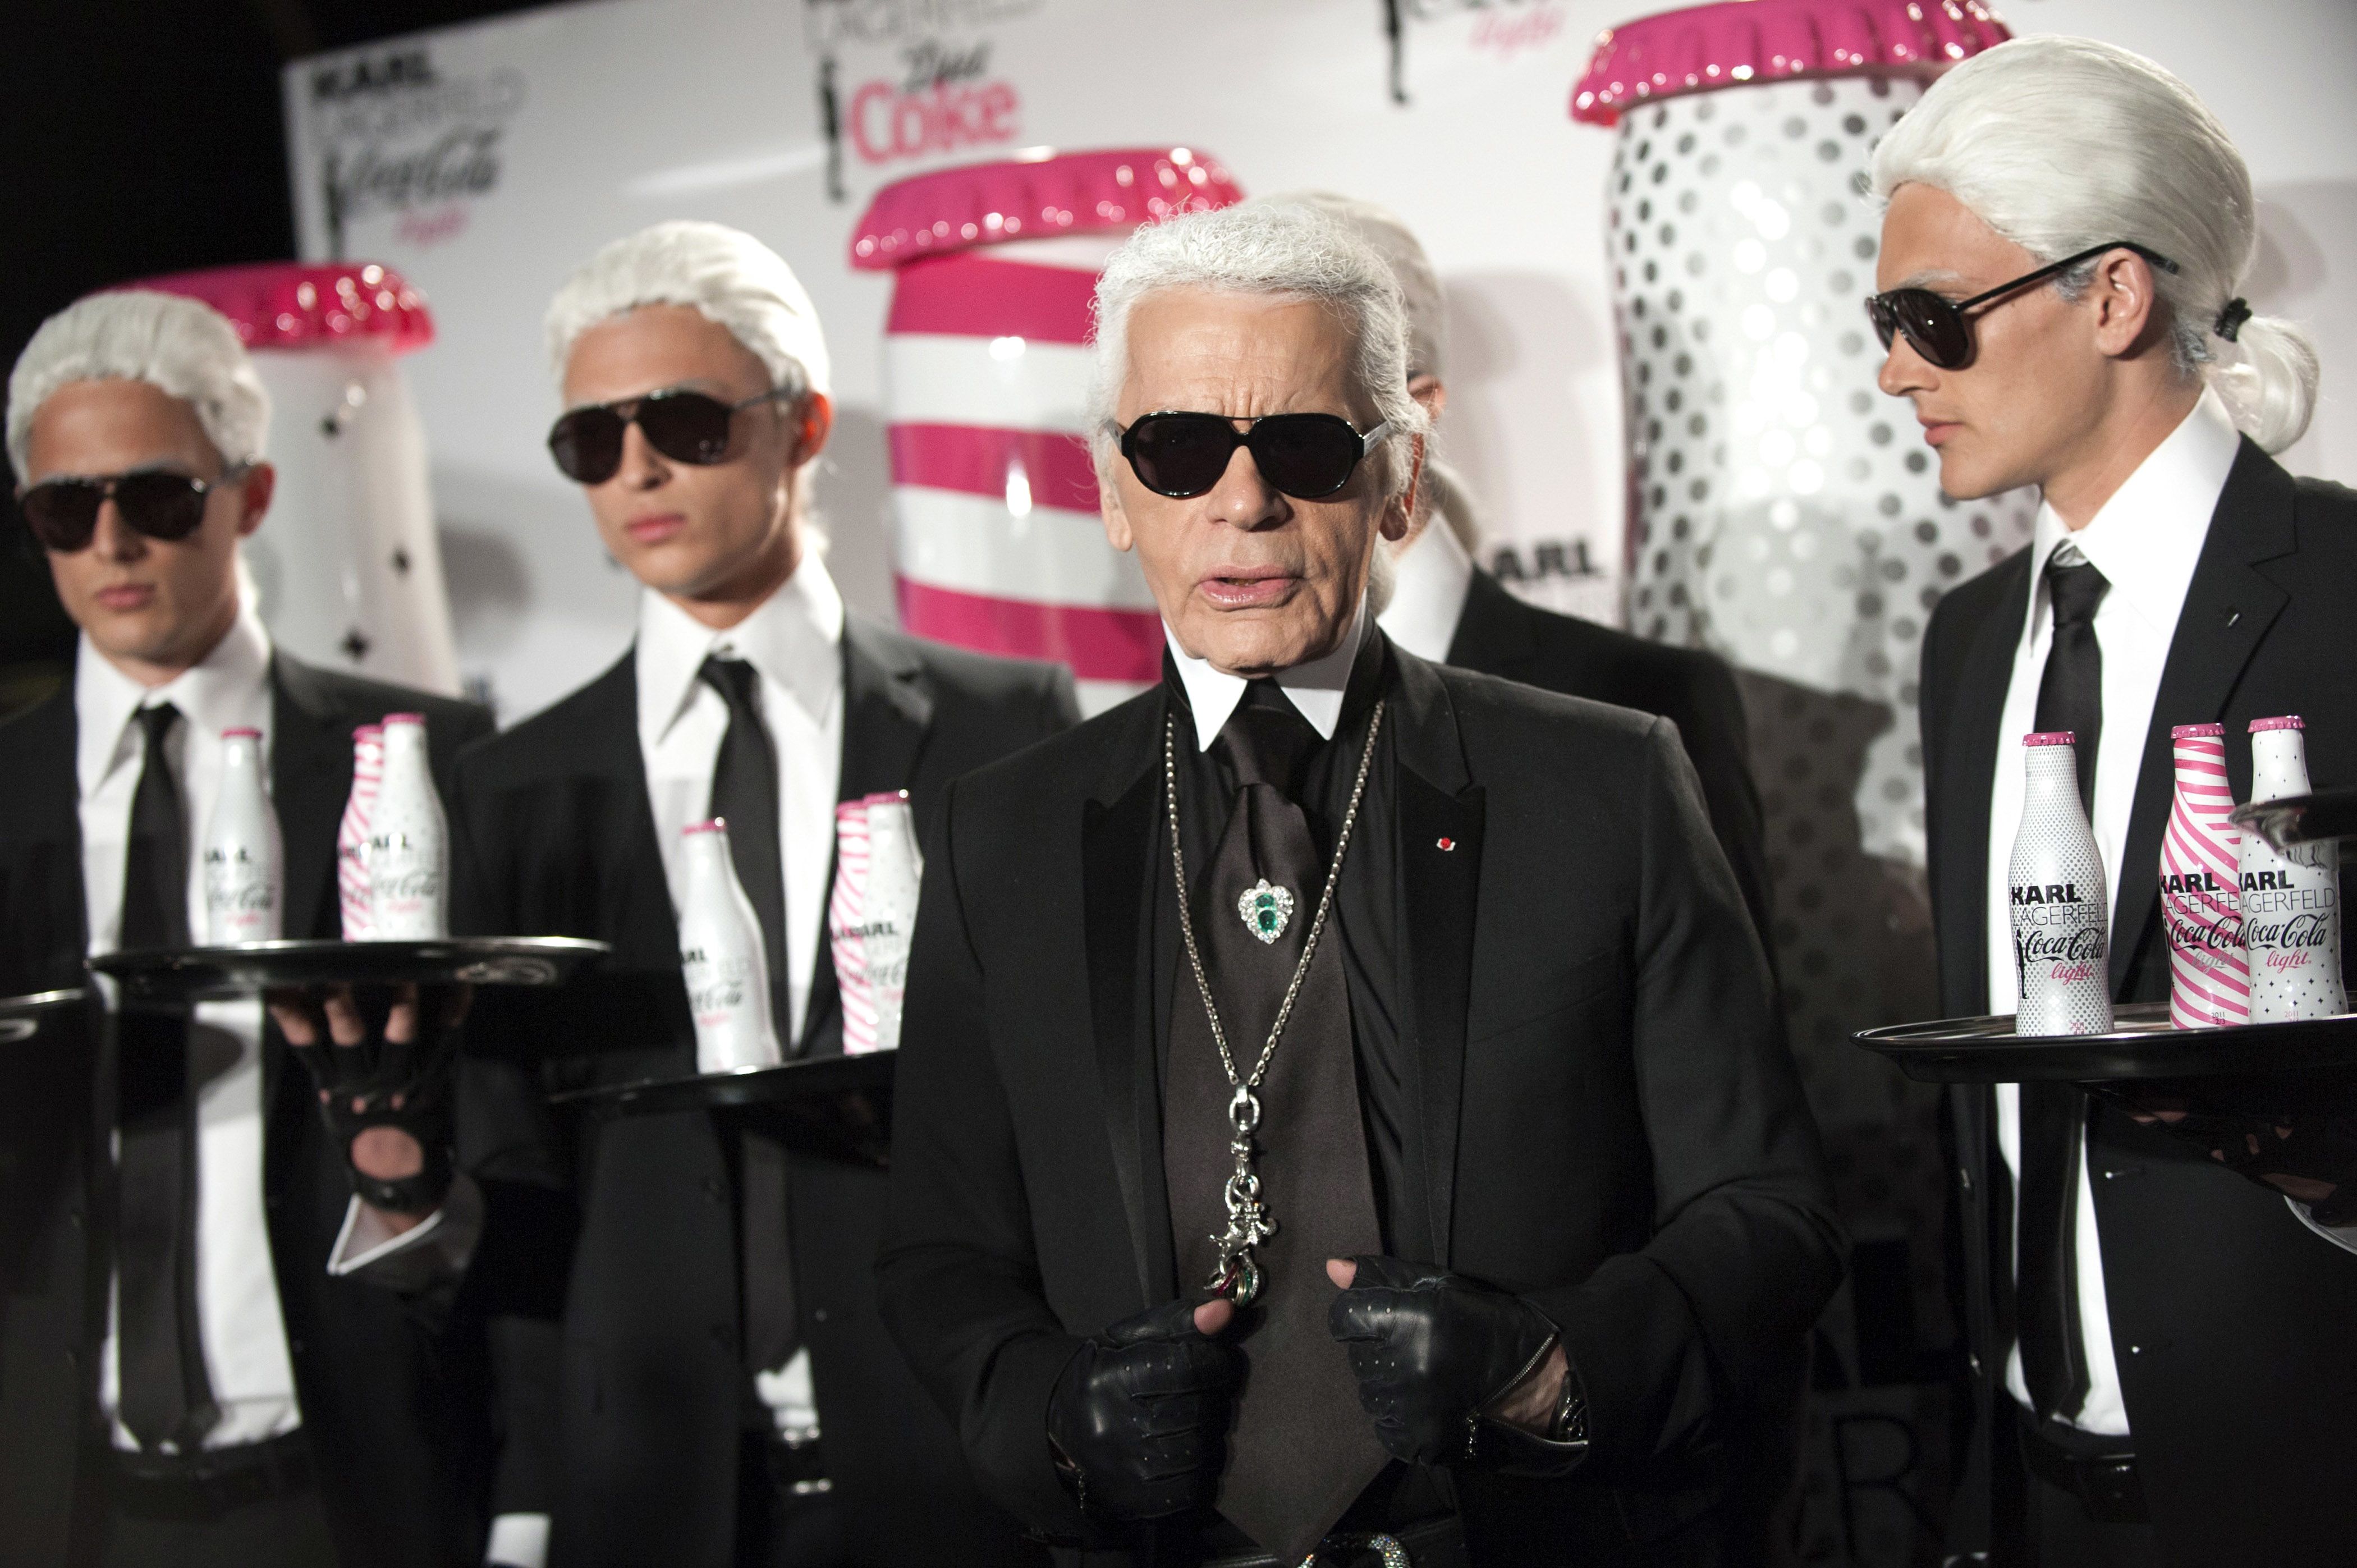 Karl Lagerfeld's enduring influence, beyond fashion weeks